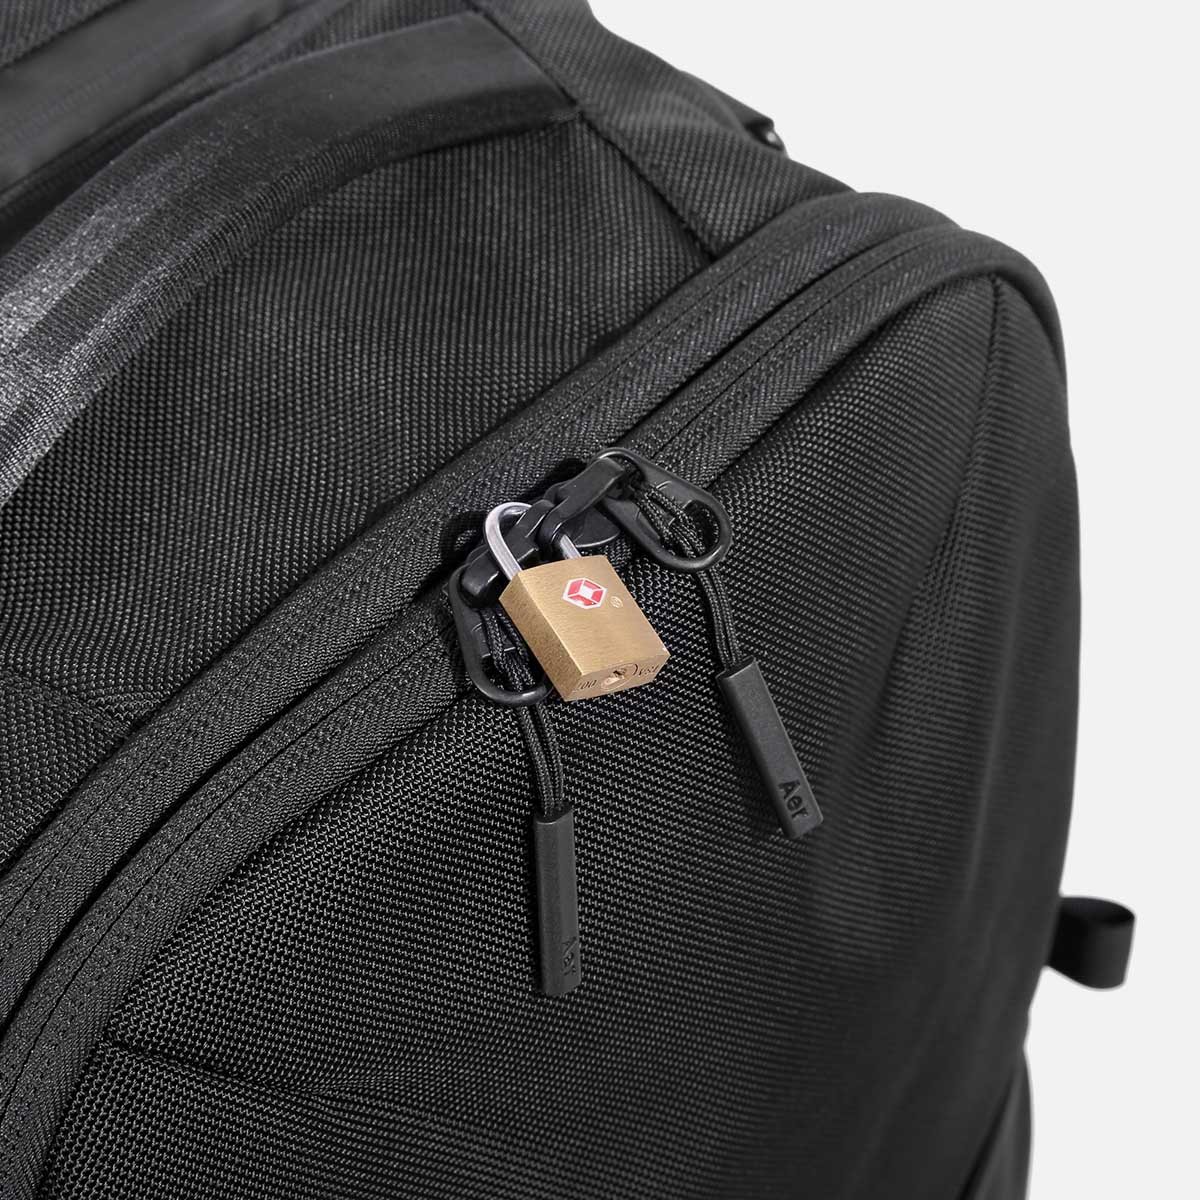 Travel Pack 3 - Black — Aer | Modern gym bags, travel backpacks 